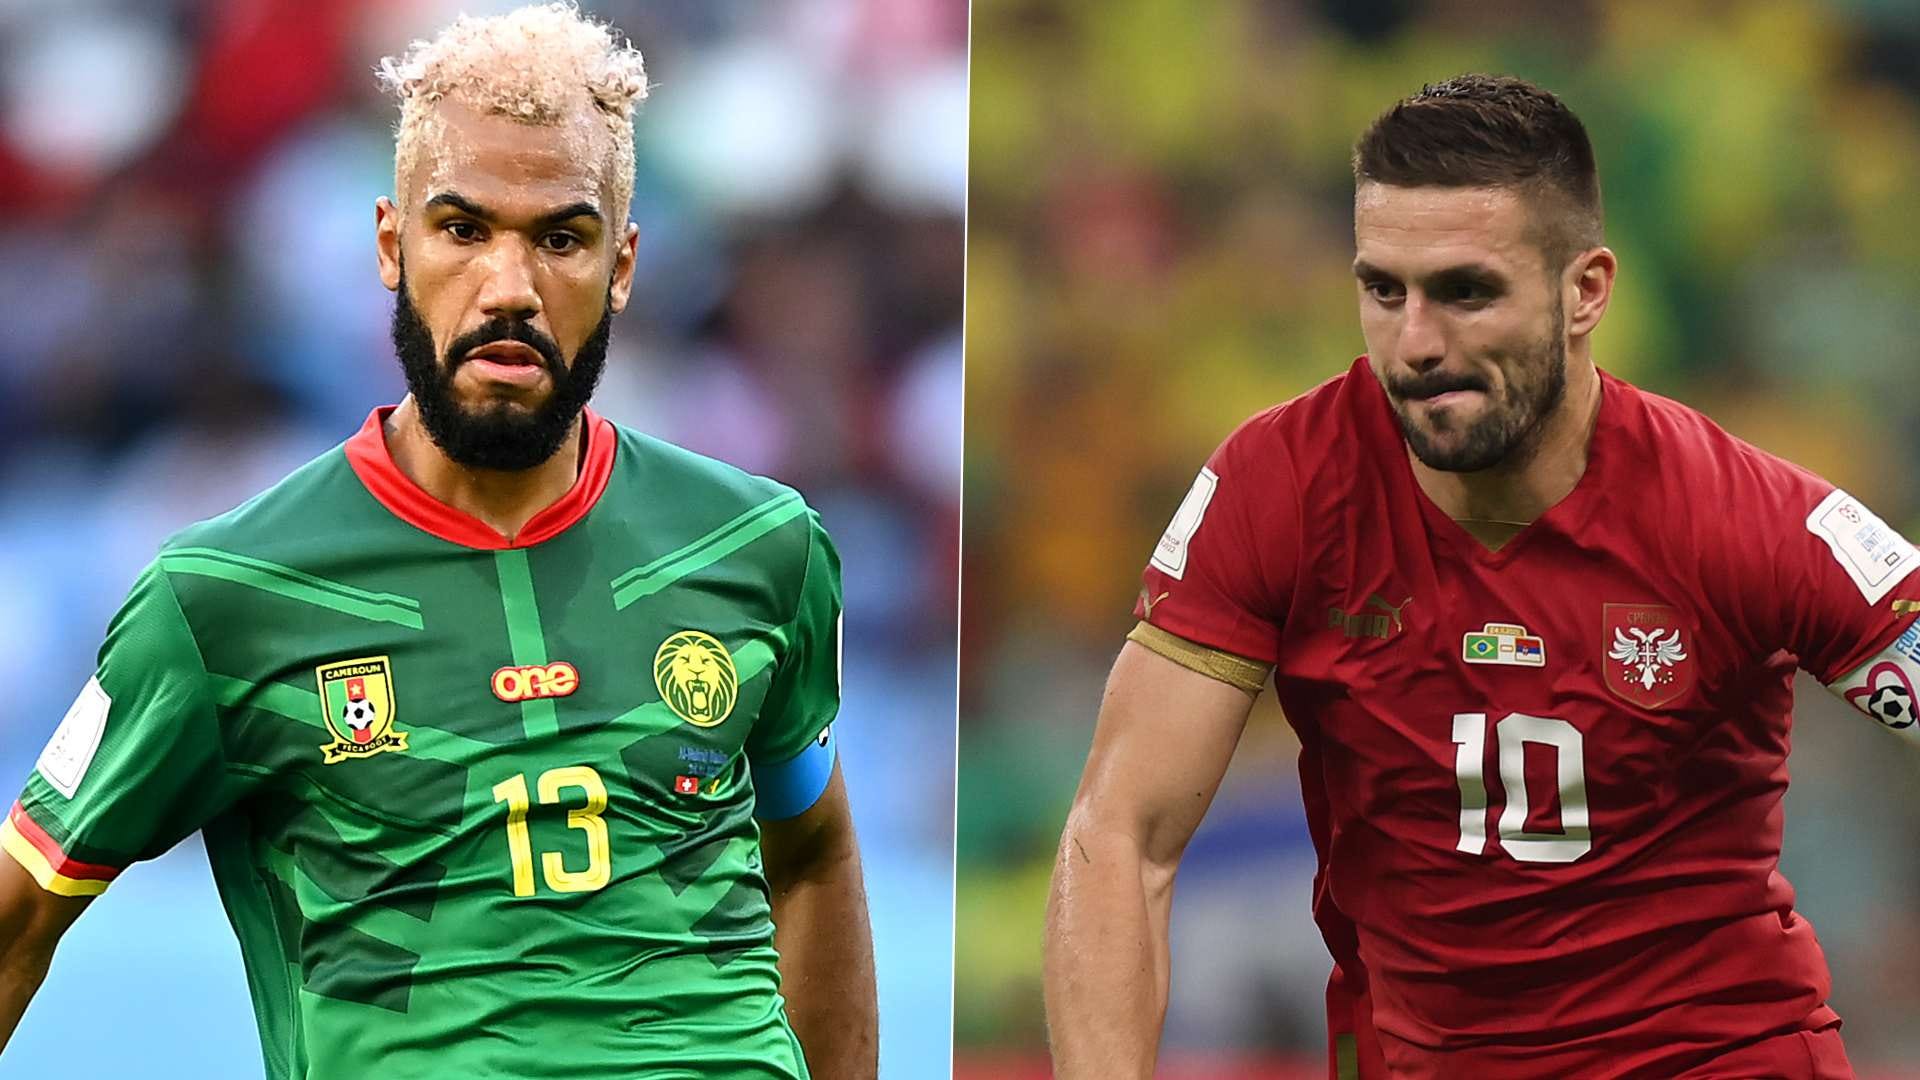 Kamerun vs